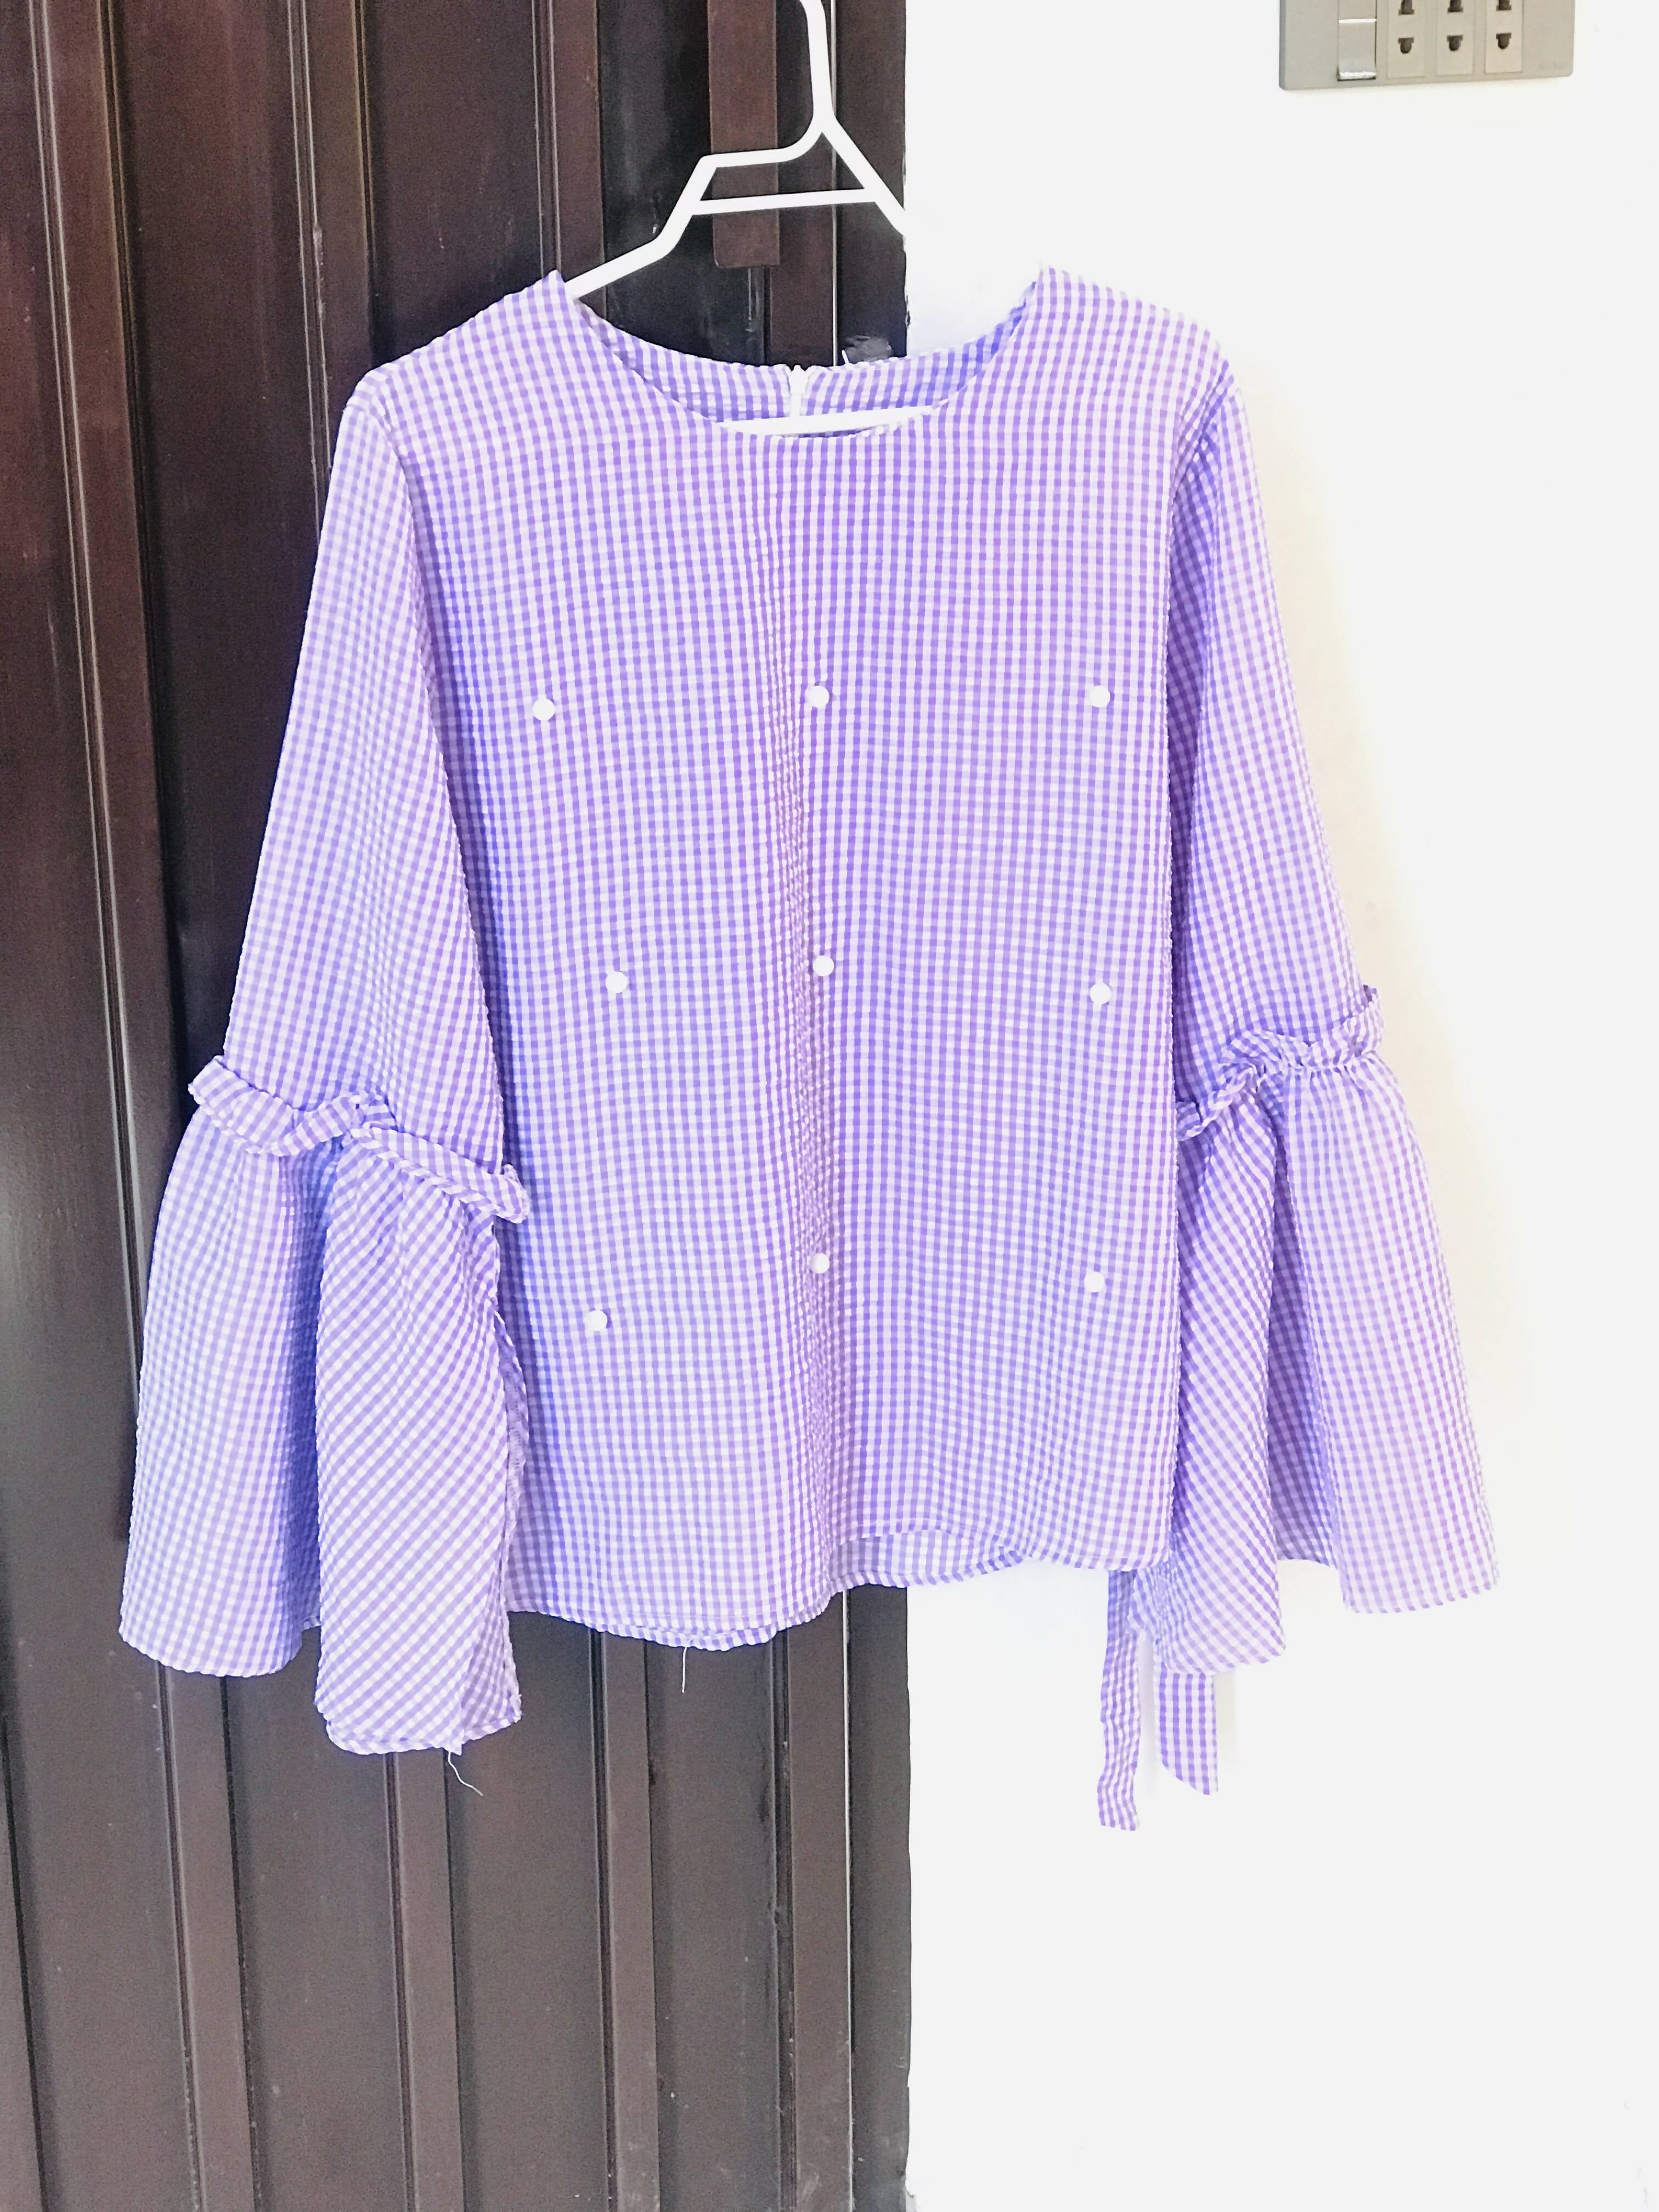 Purple Short top (Size: L ) | Women Tops & Shirts | New